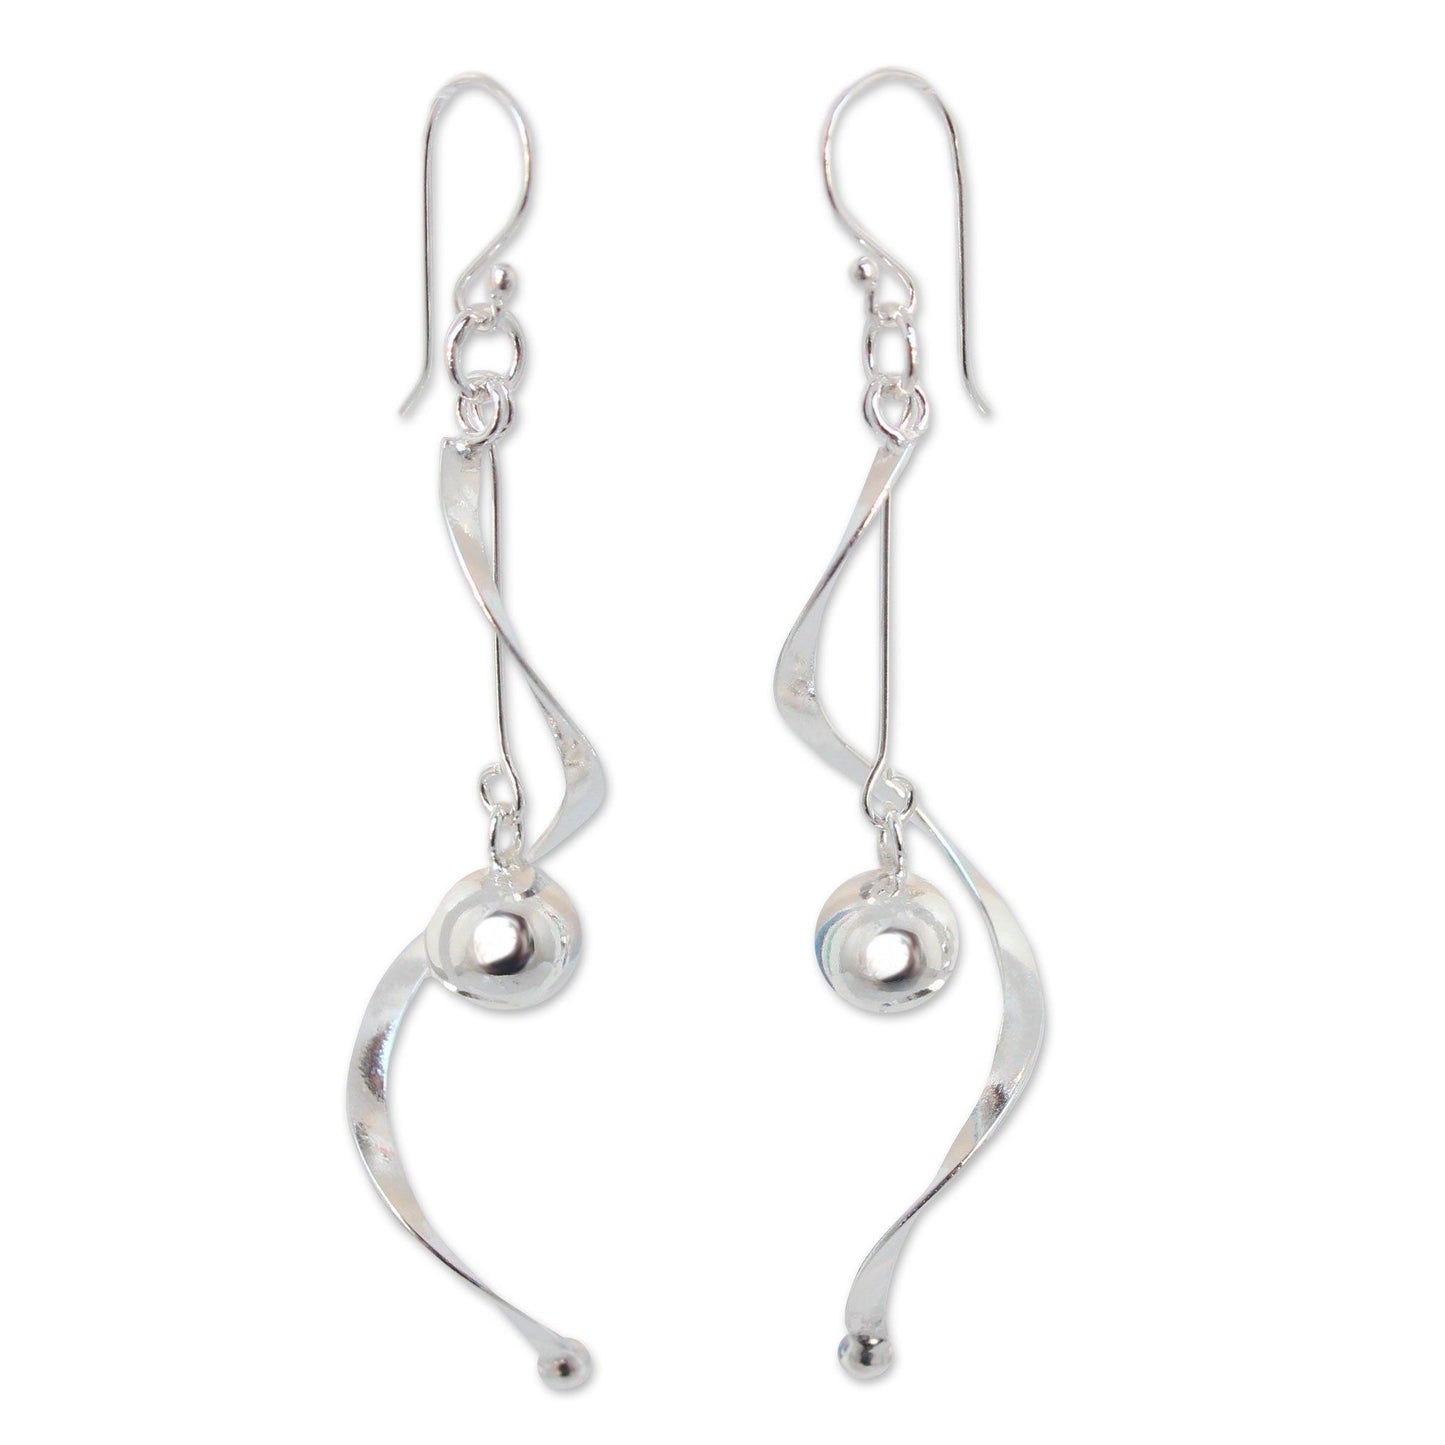 NOVICA - Handcrafted Sterling Silver Pendulum Earrings